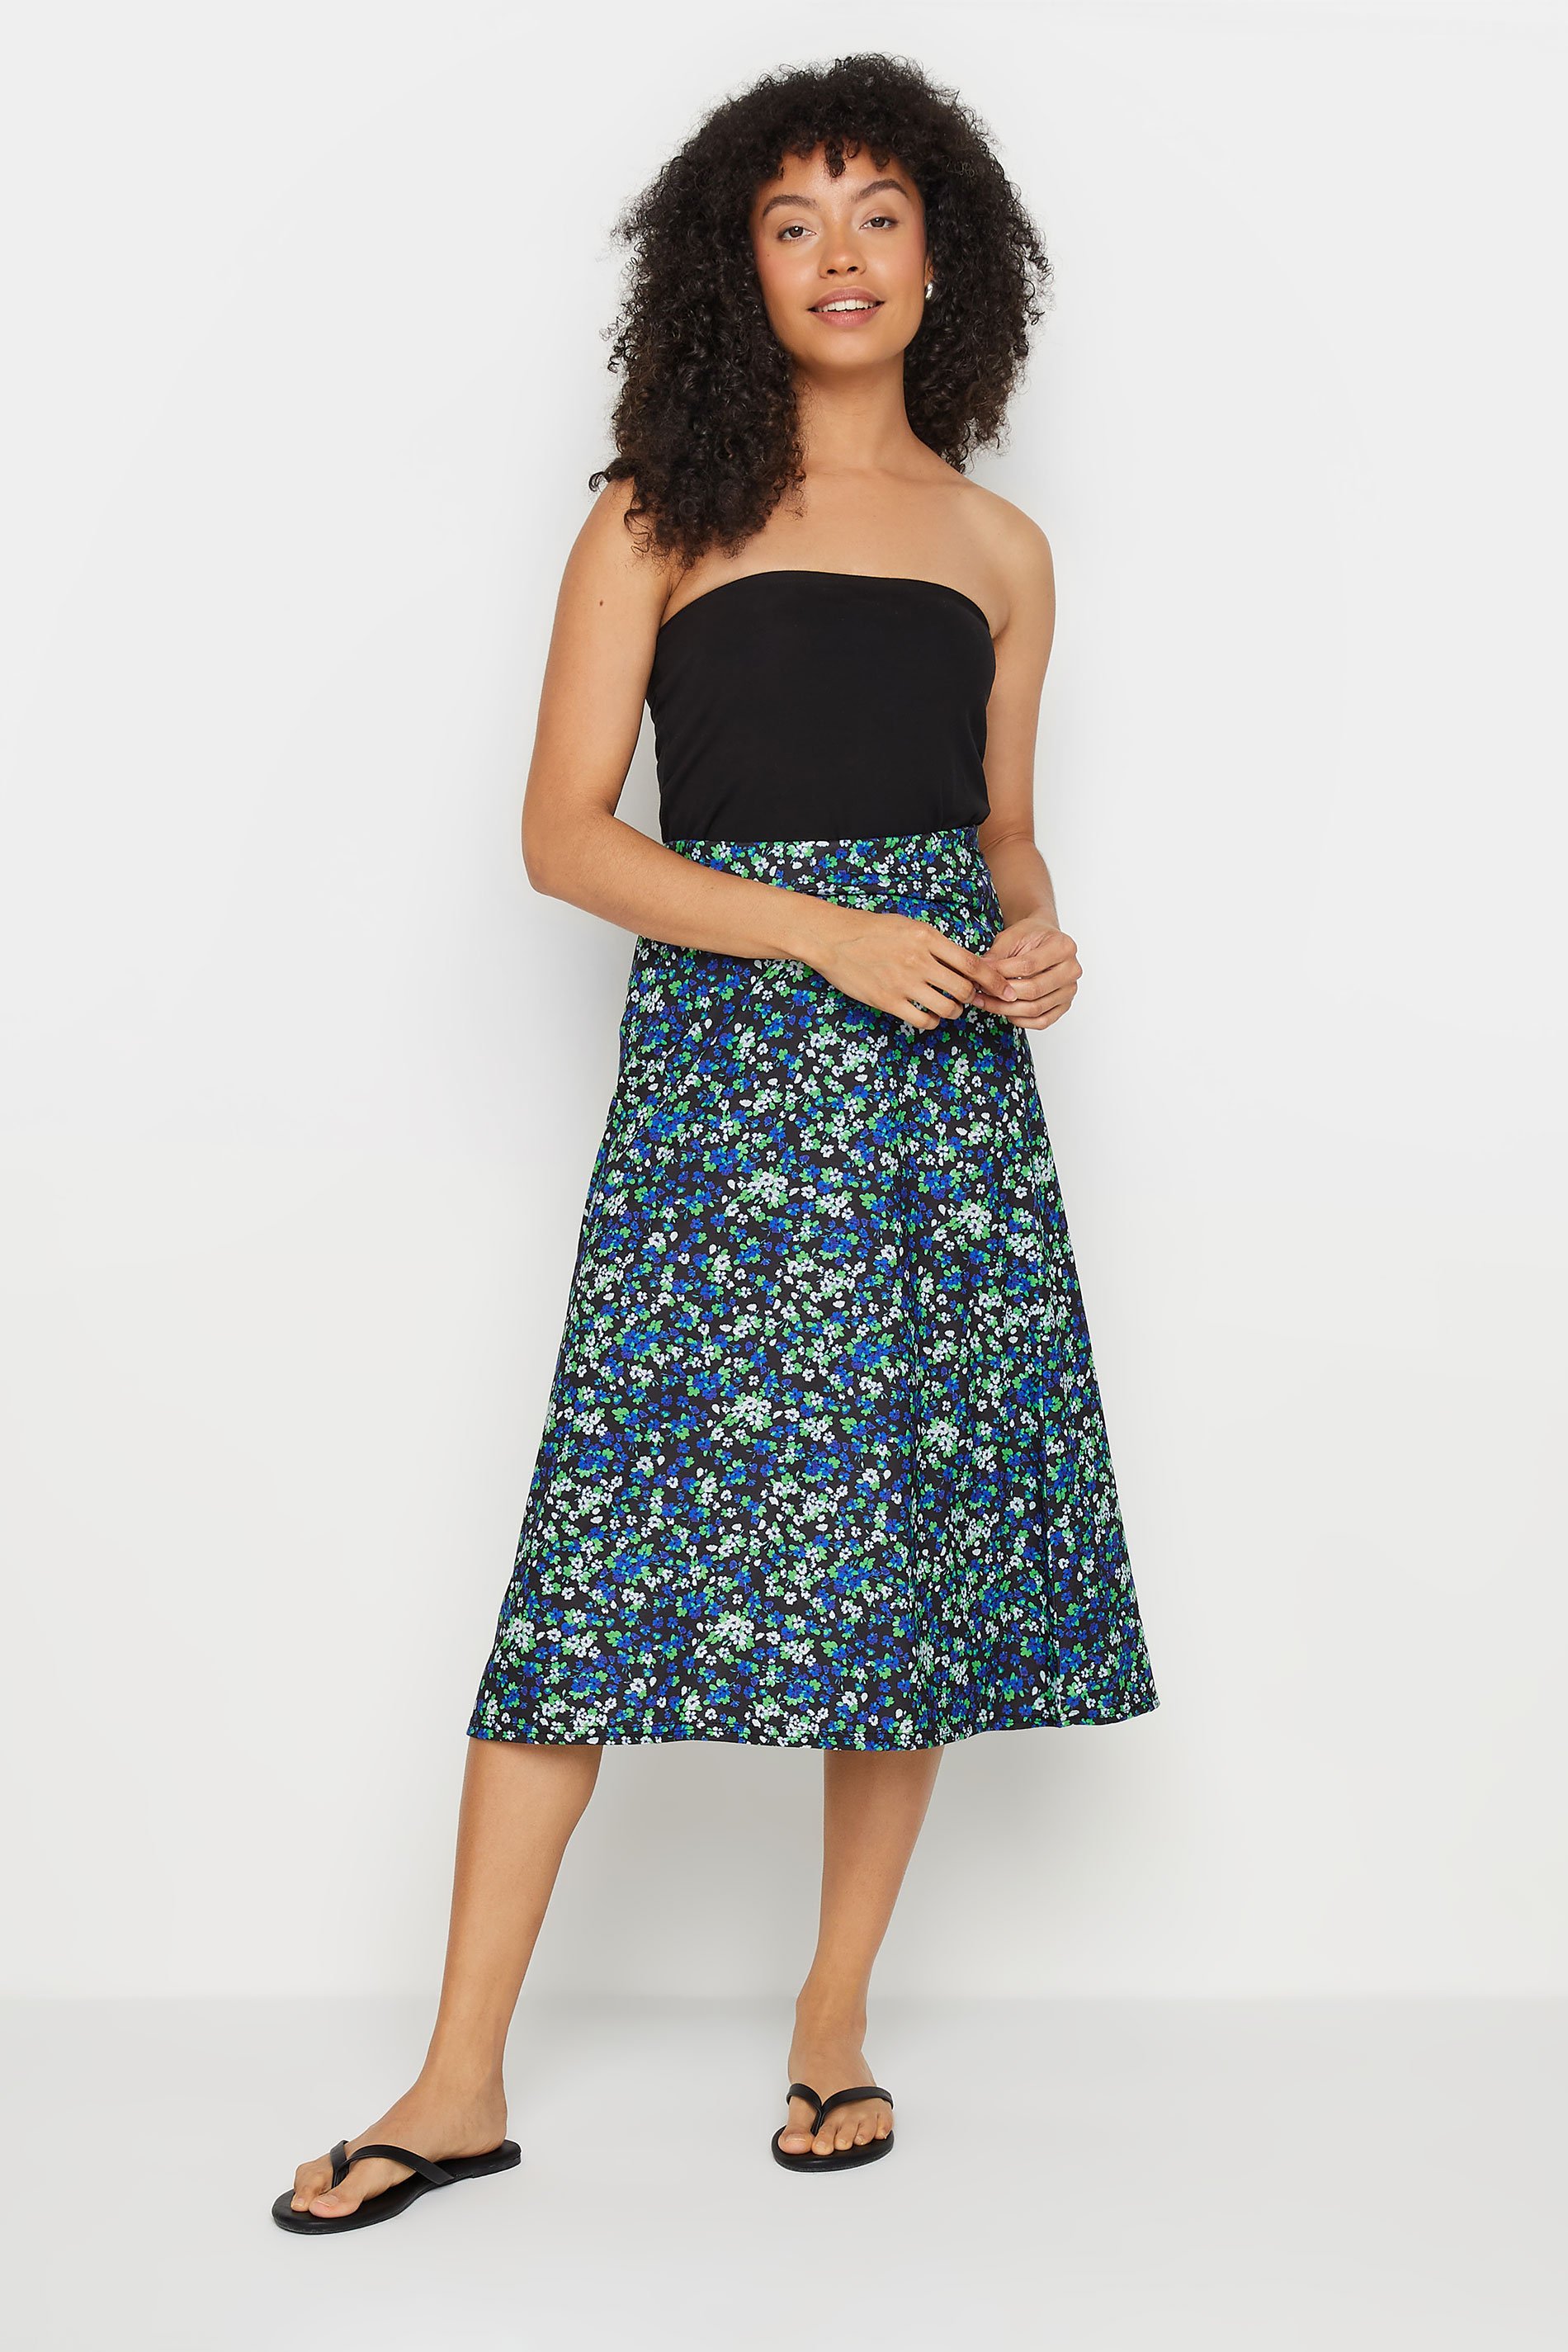 M&Co Black Ditsy Floral Print Tie Waist Skirt | M&Co 2